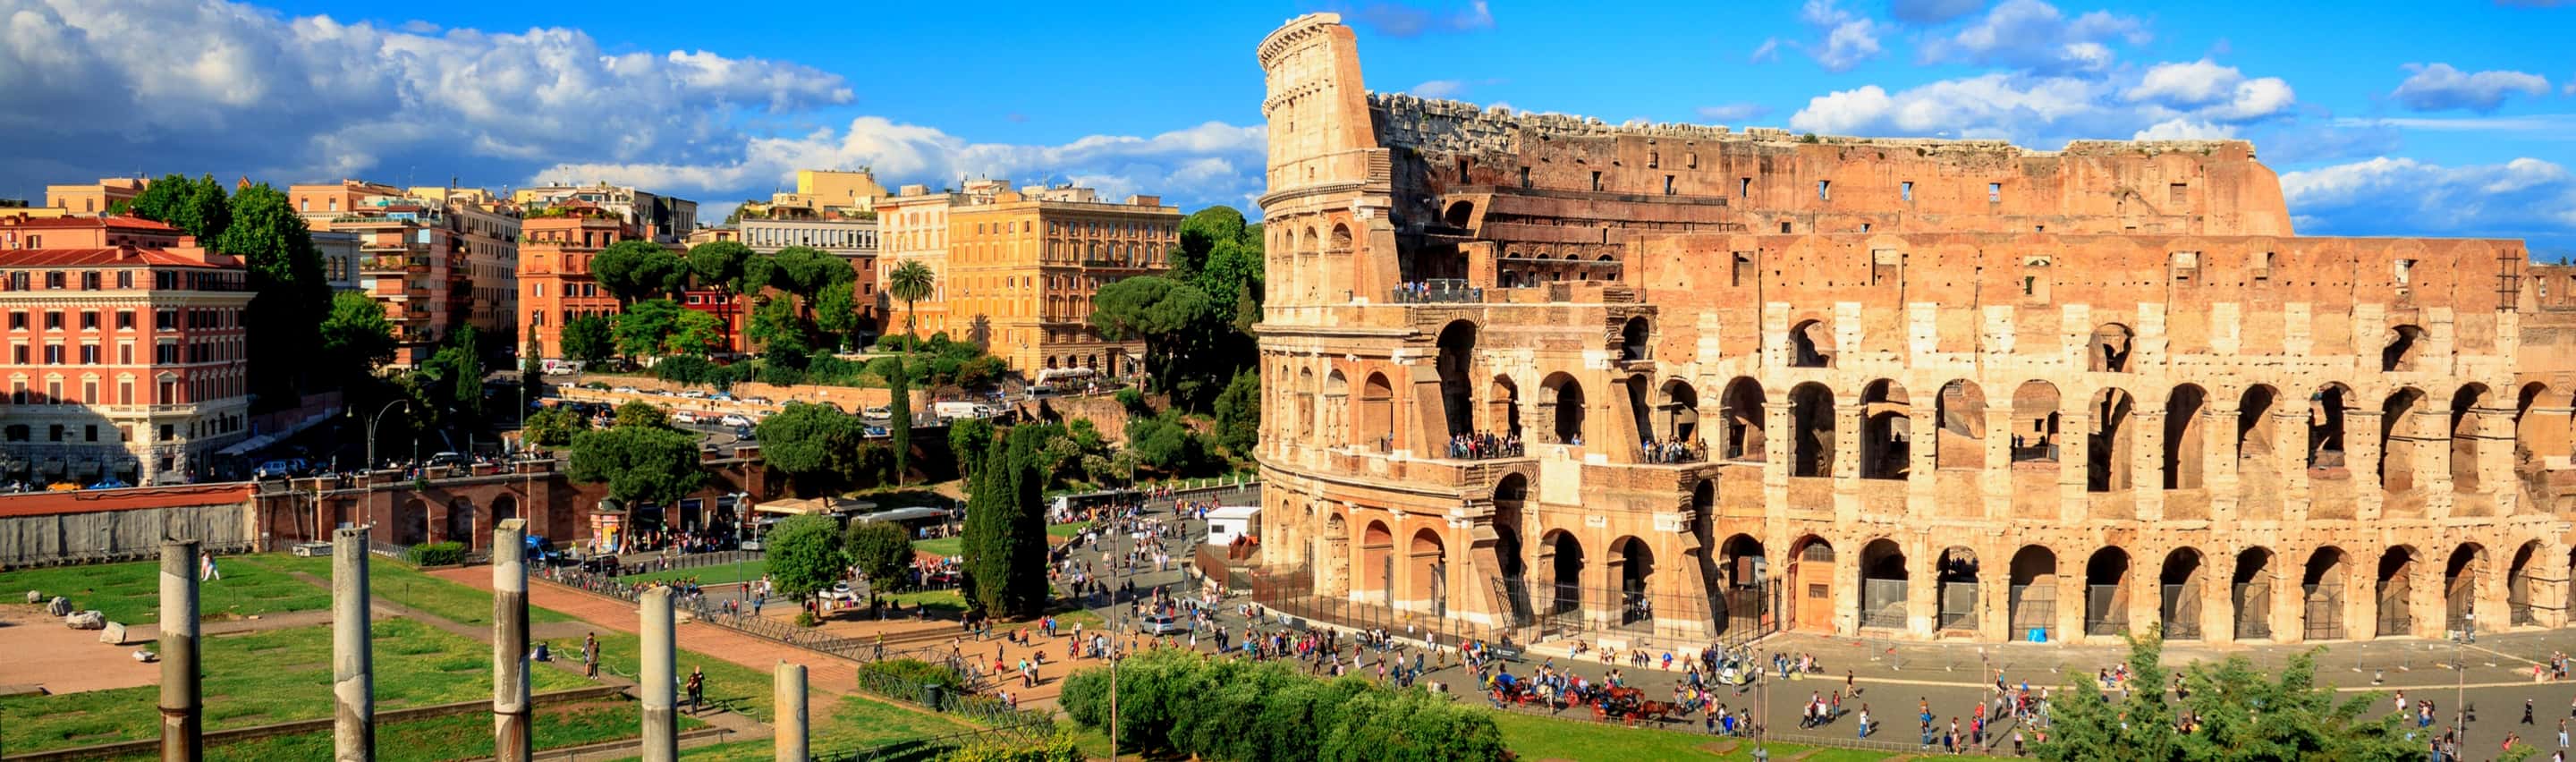 Top Level Special Access Colosseum Tour